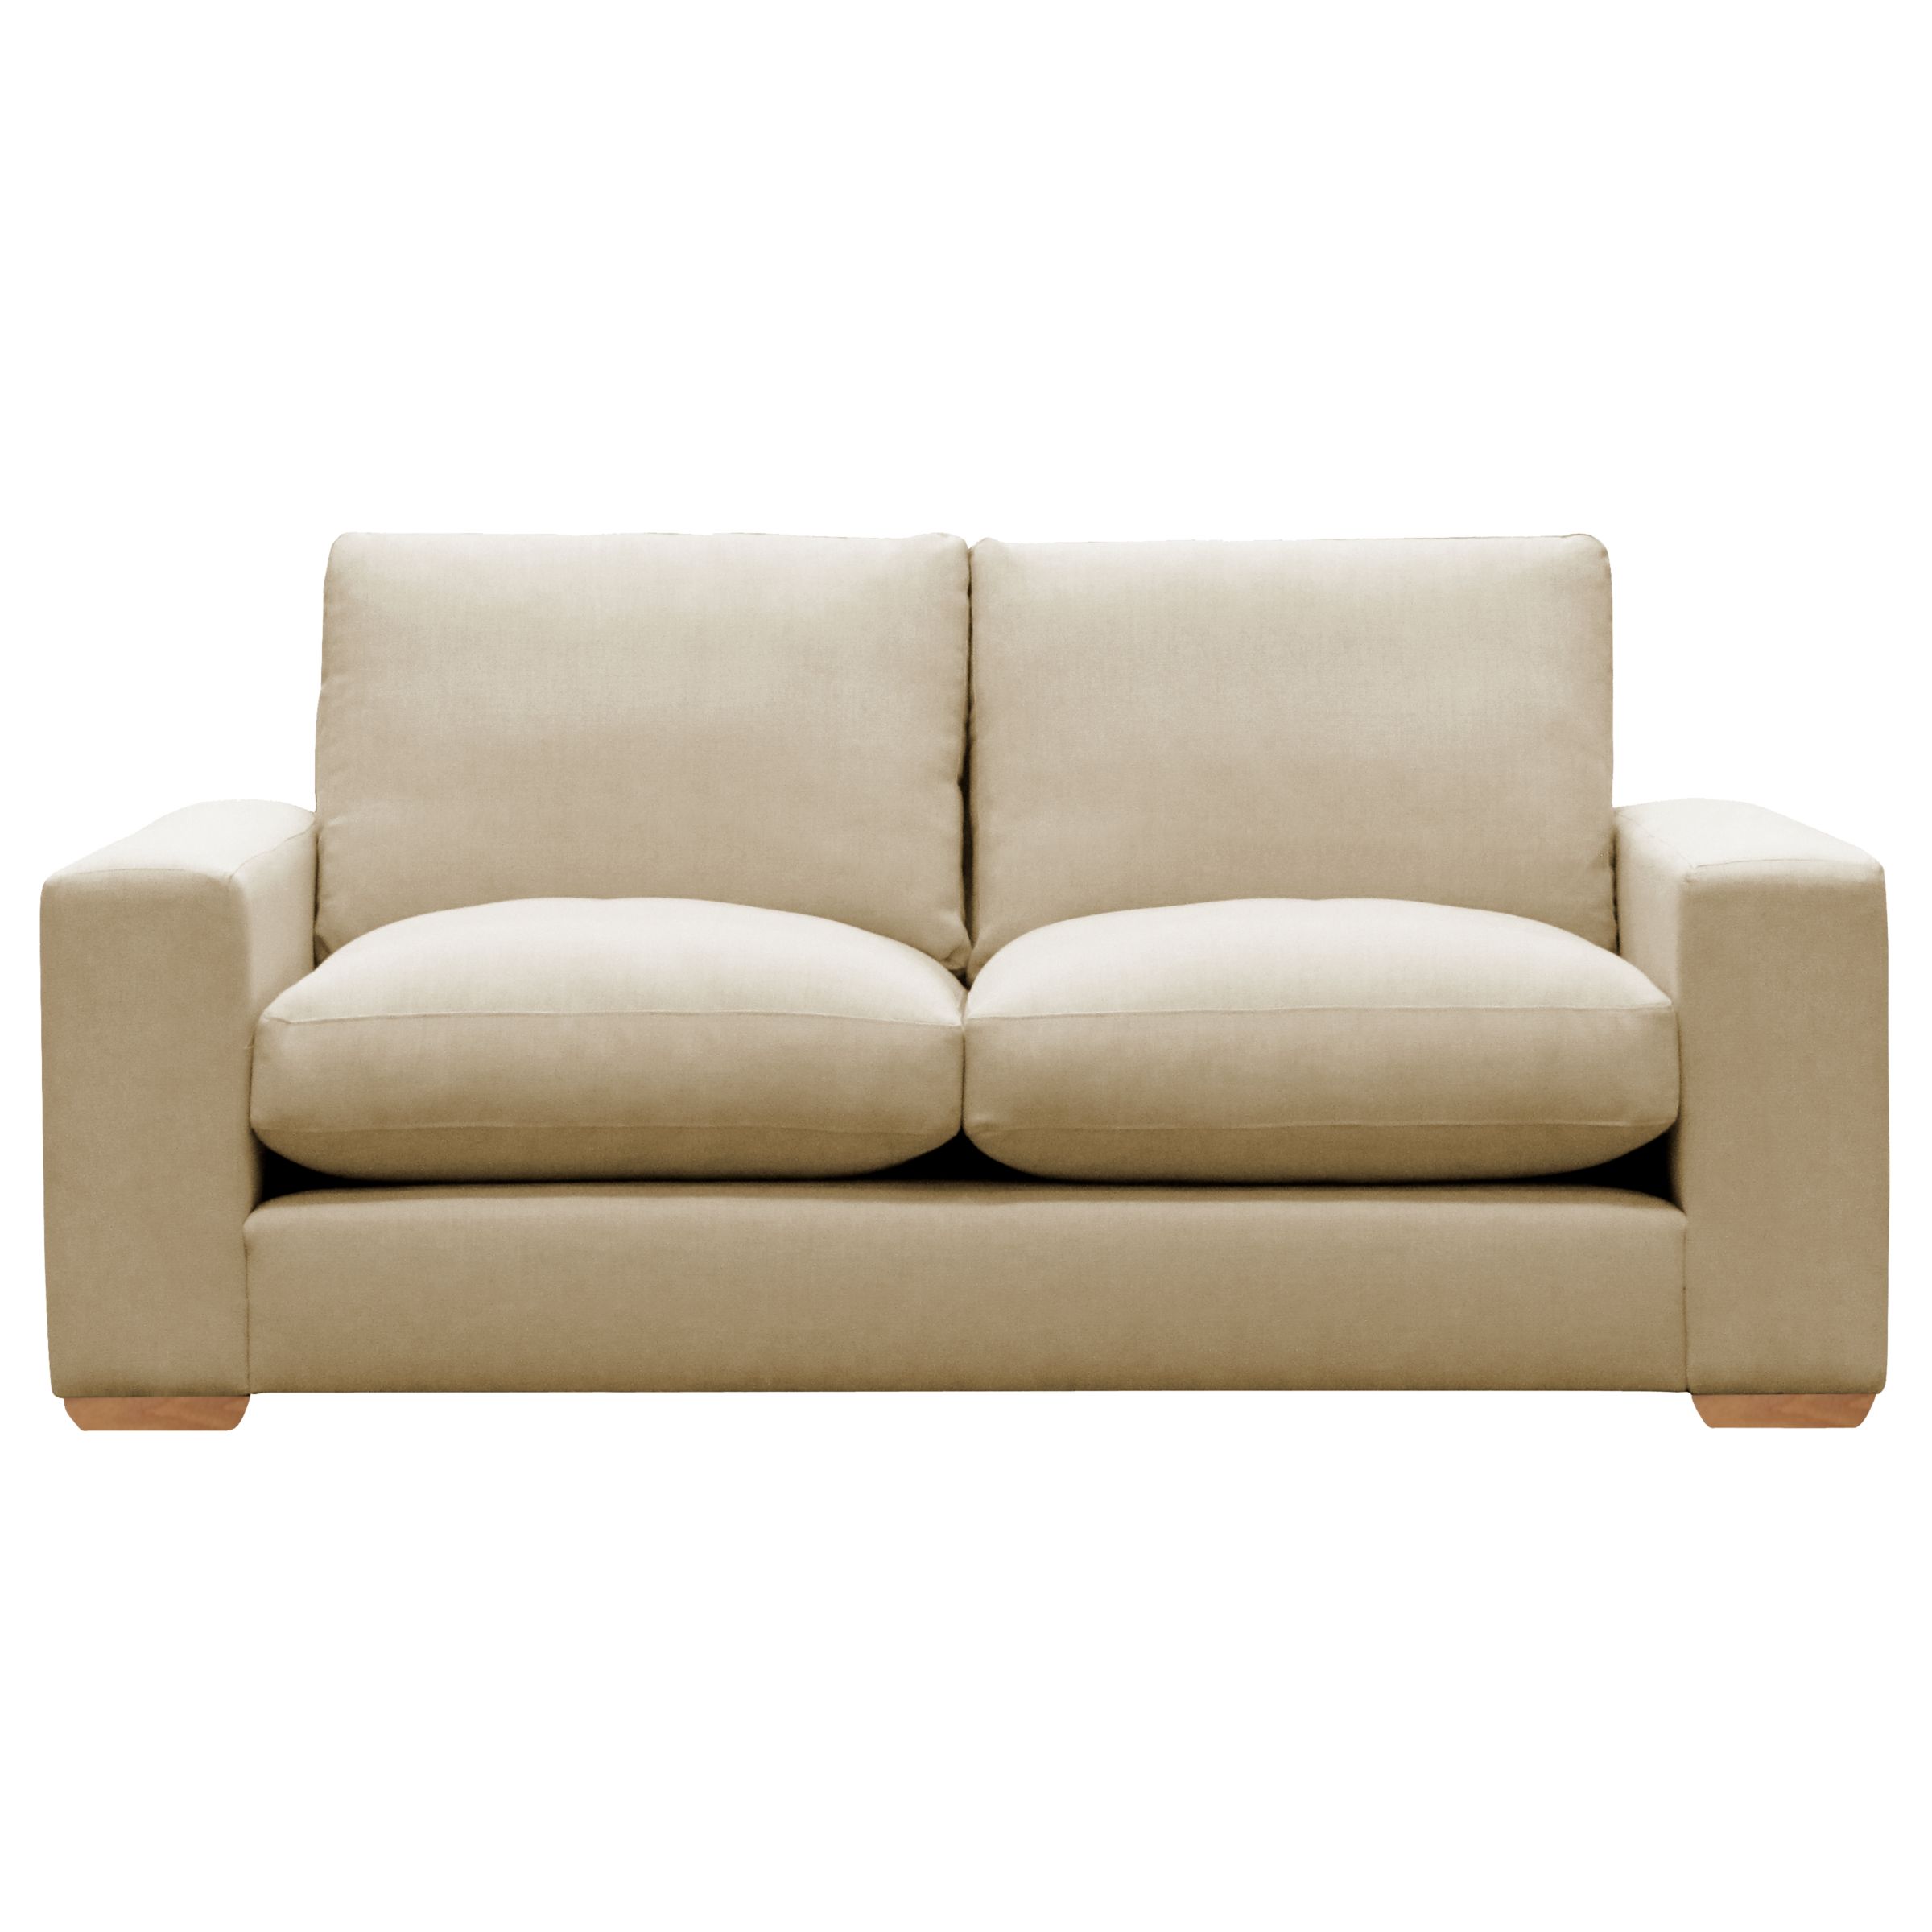 John Lewis Options Wide Arm Medium Sofa, Eaton Mocha, width 183cm